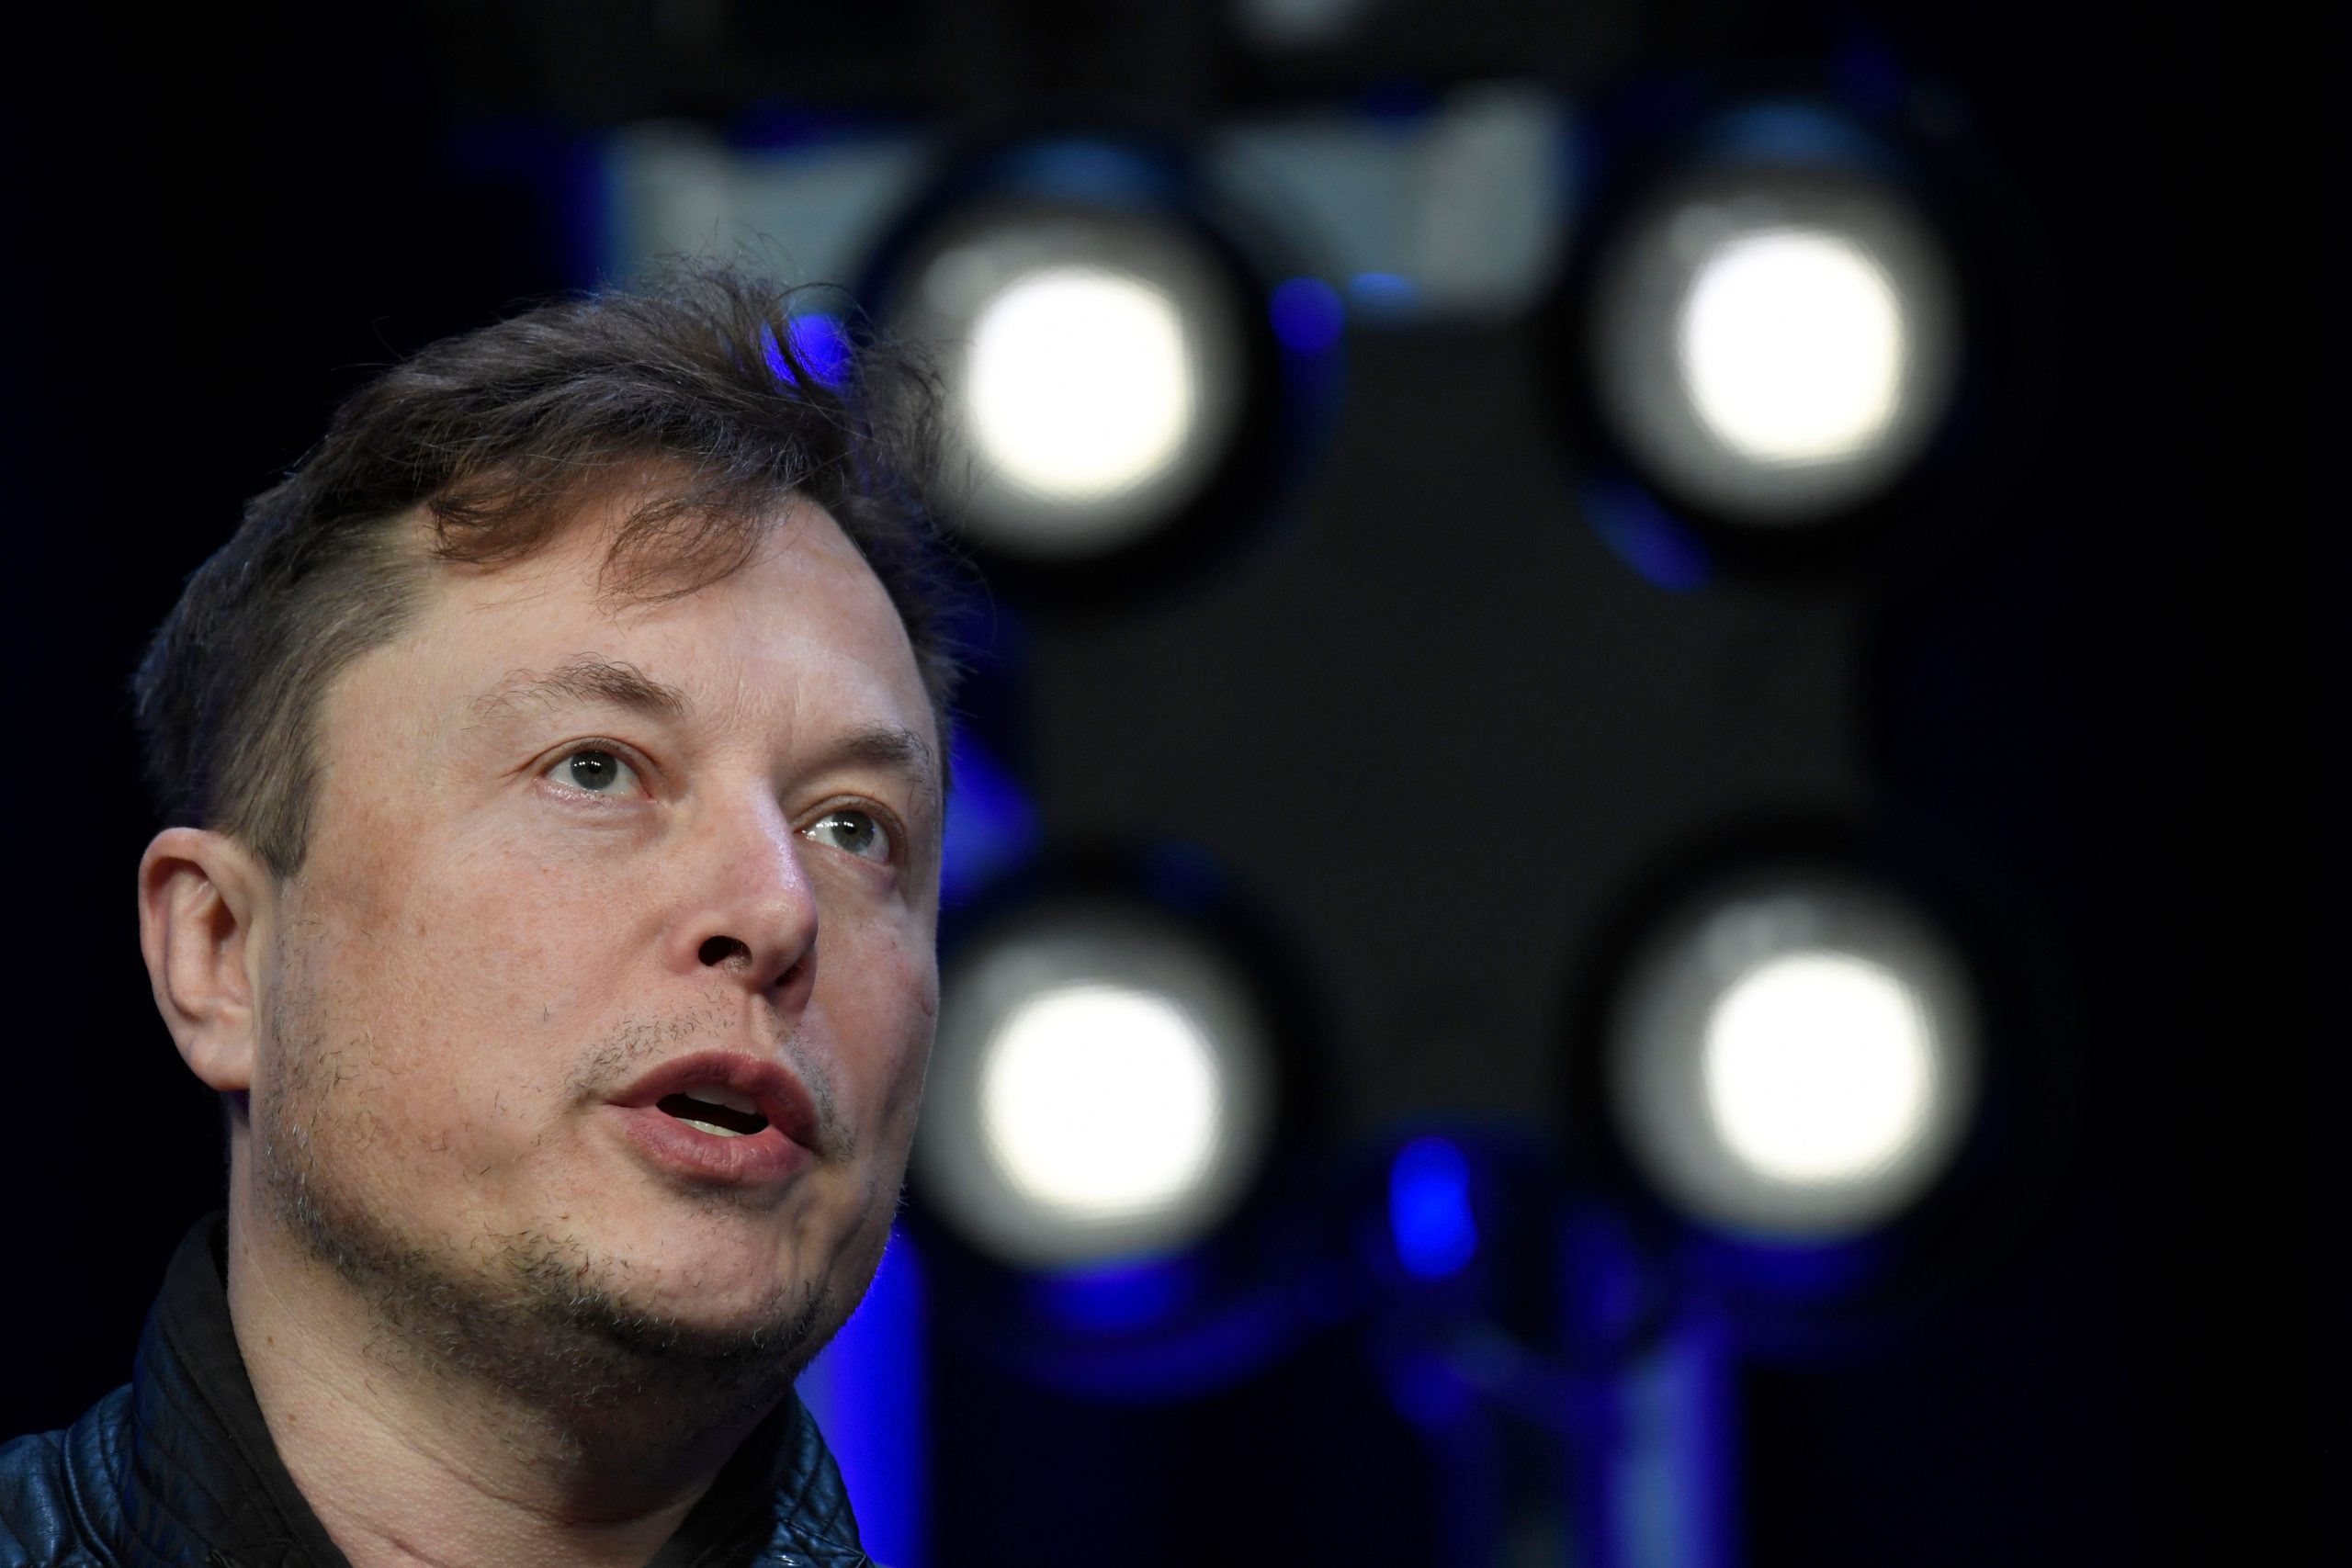 Binance, Sequoia commit $1.3 billion to back Elon Musk’s Twitter takeover bid